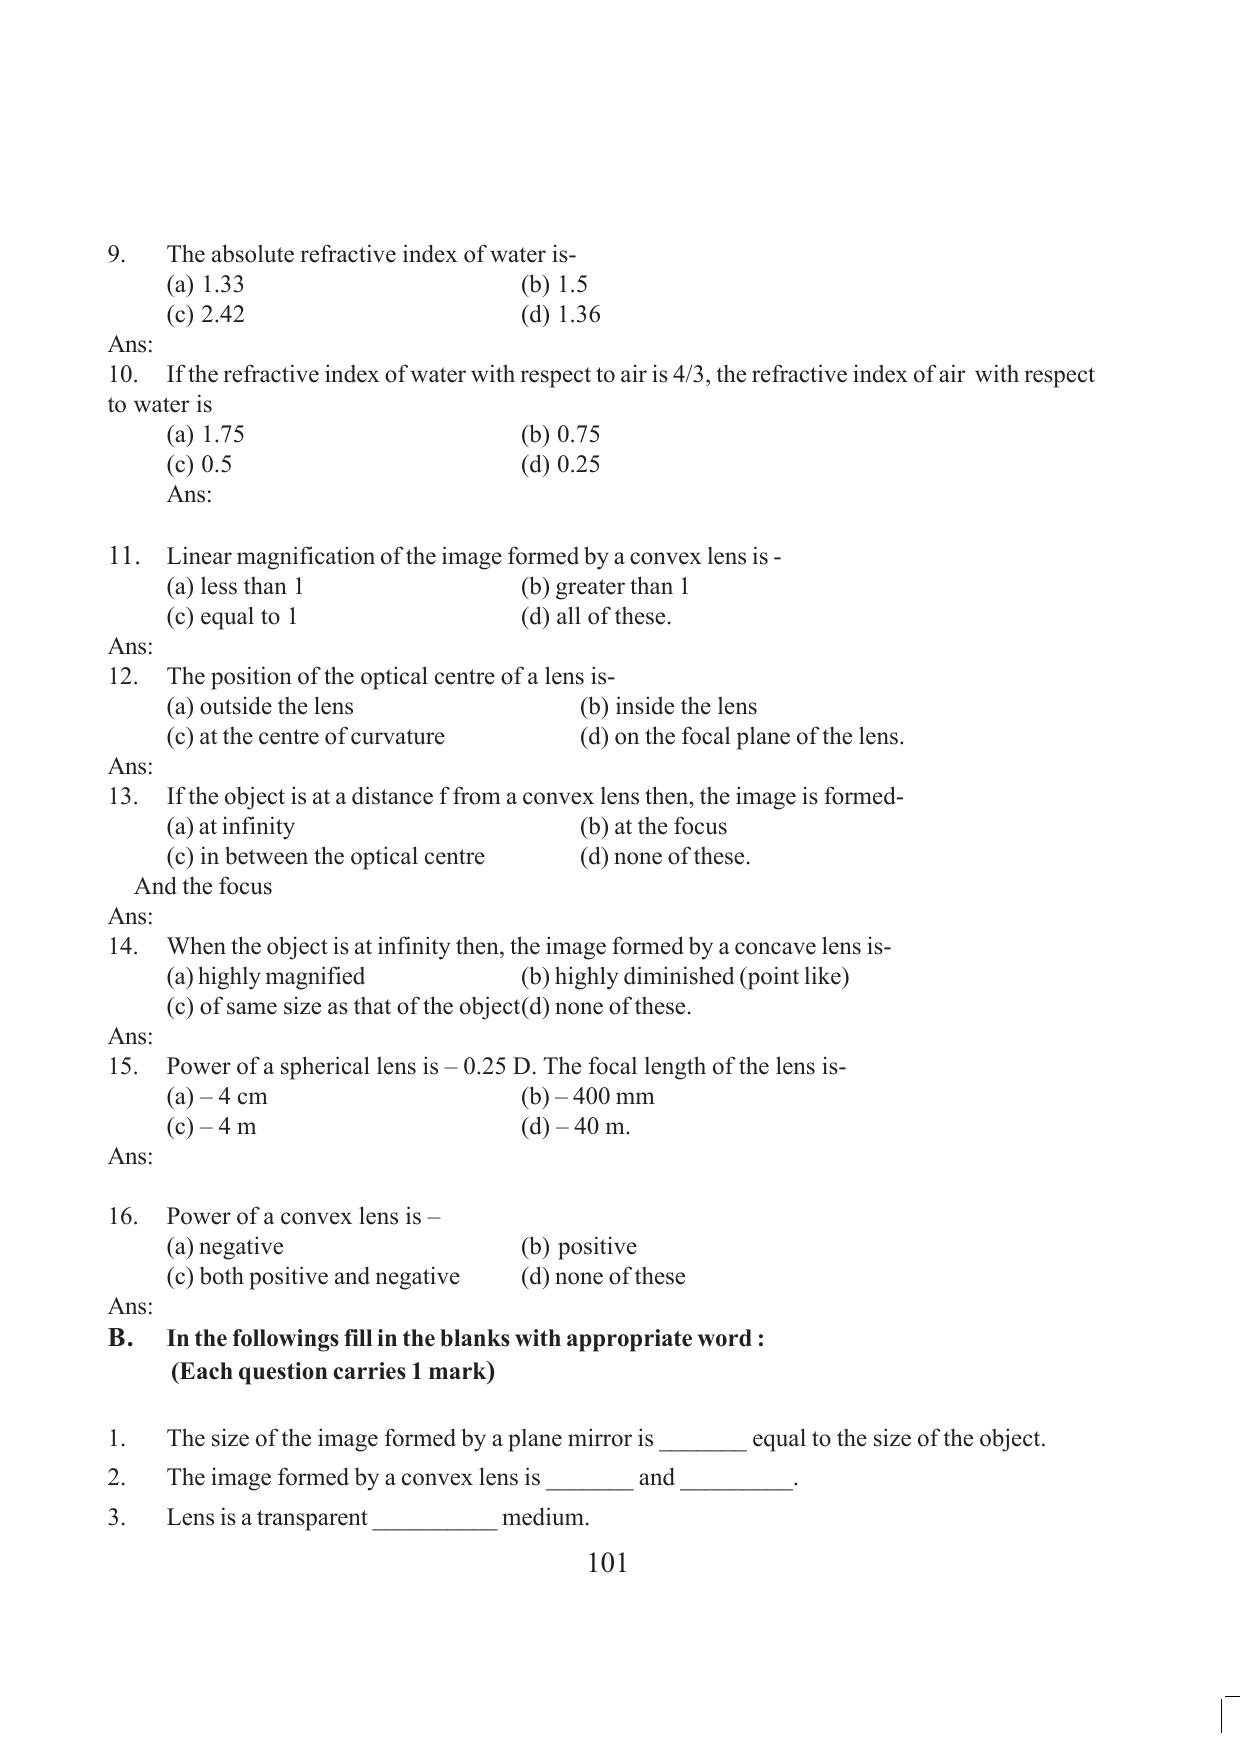 Tripura Board Class 10 Science English Version Workbooks - Page 107